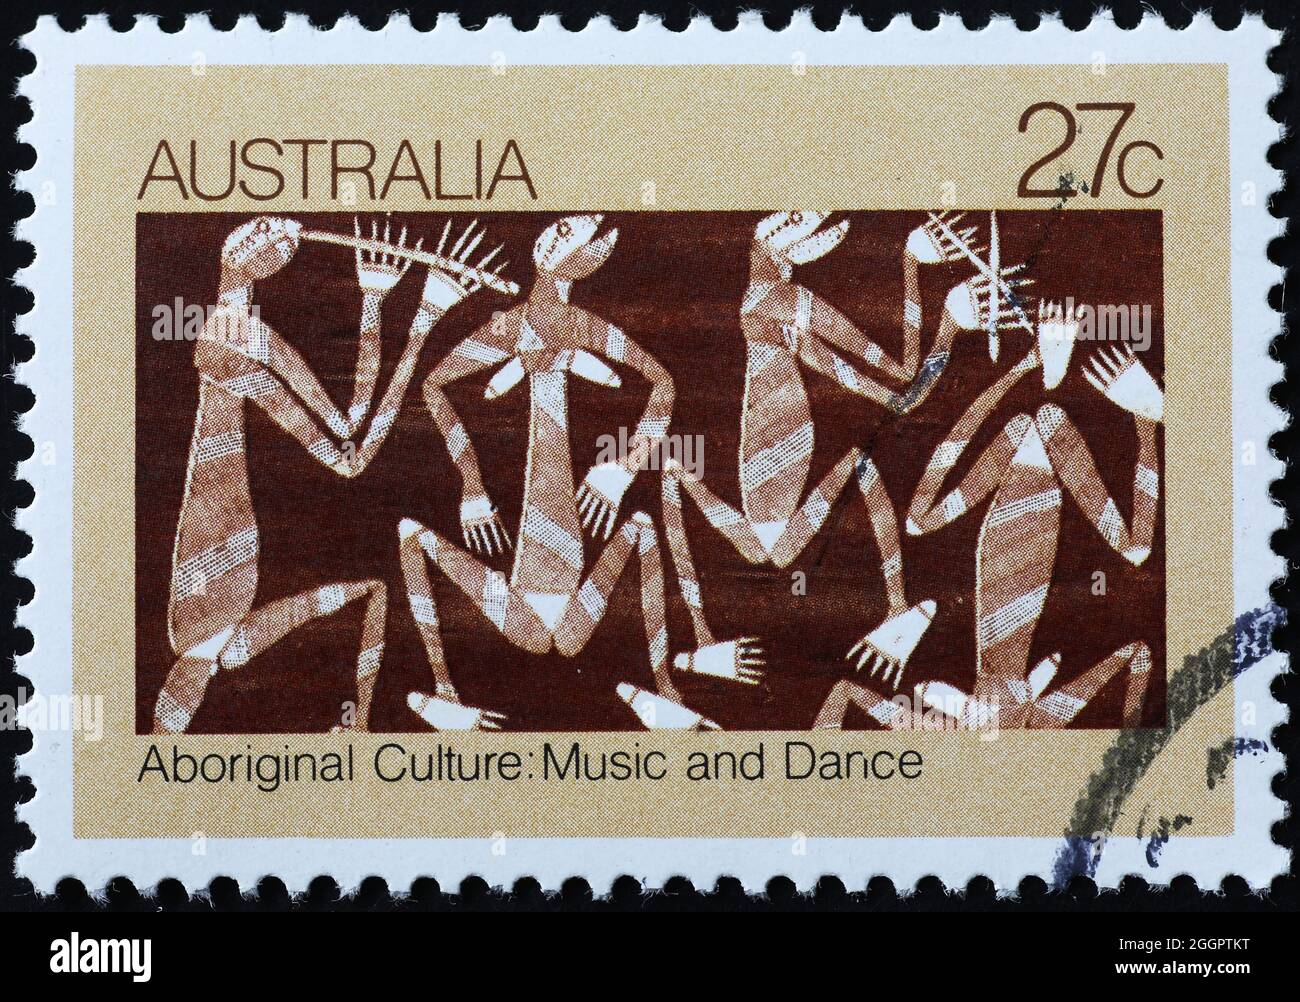 Native Australian Wiruungga Dunggiirr Aboriginal applies white